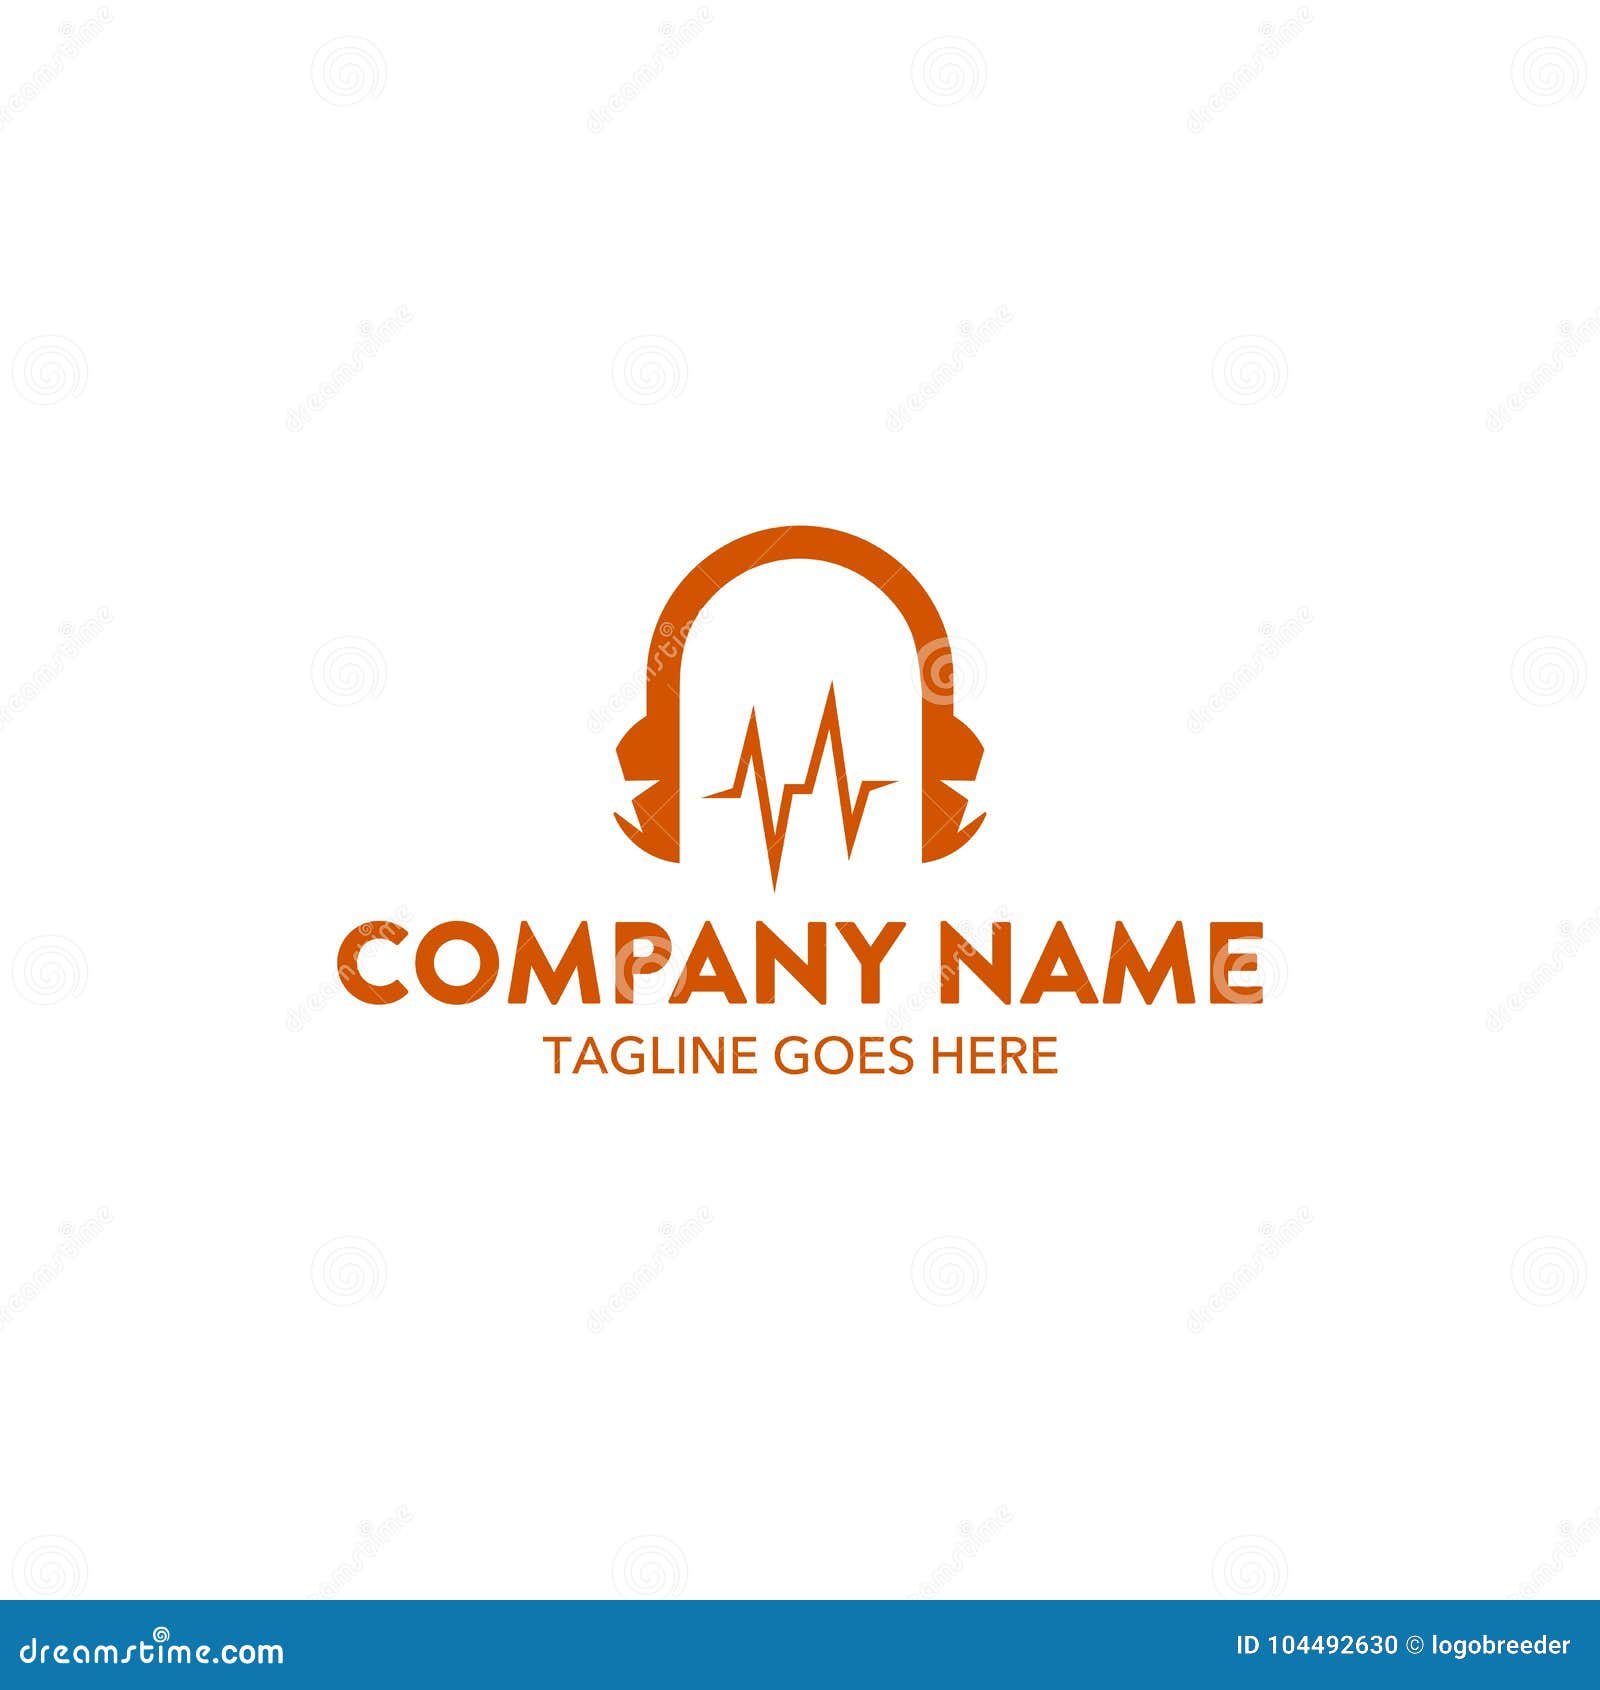 Unique Dj Music Related Logo Template. Vector Stock Vector ...